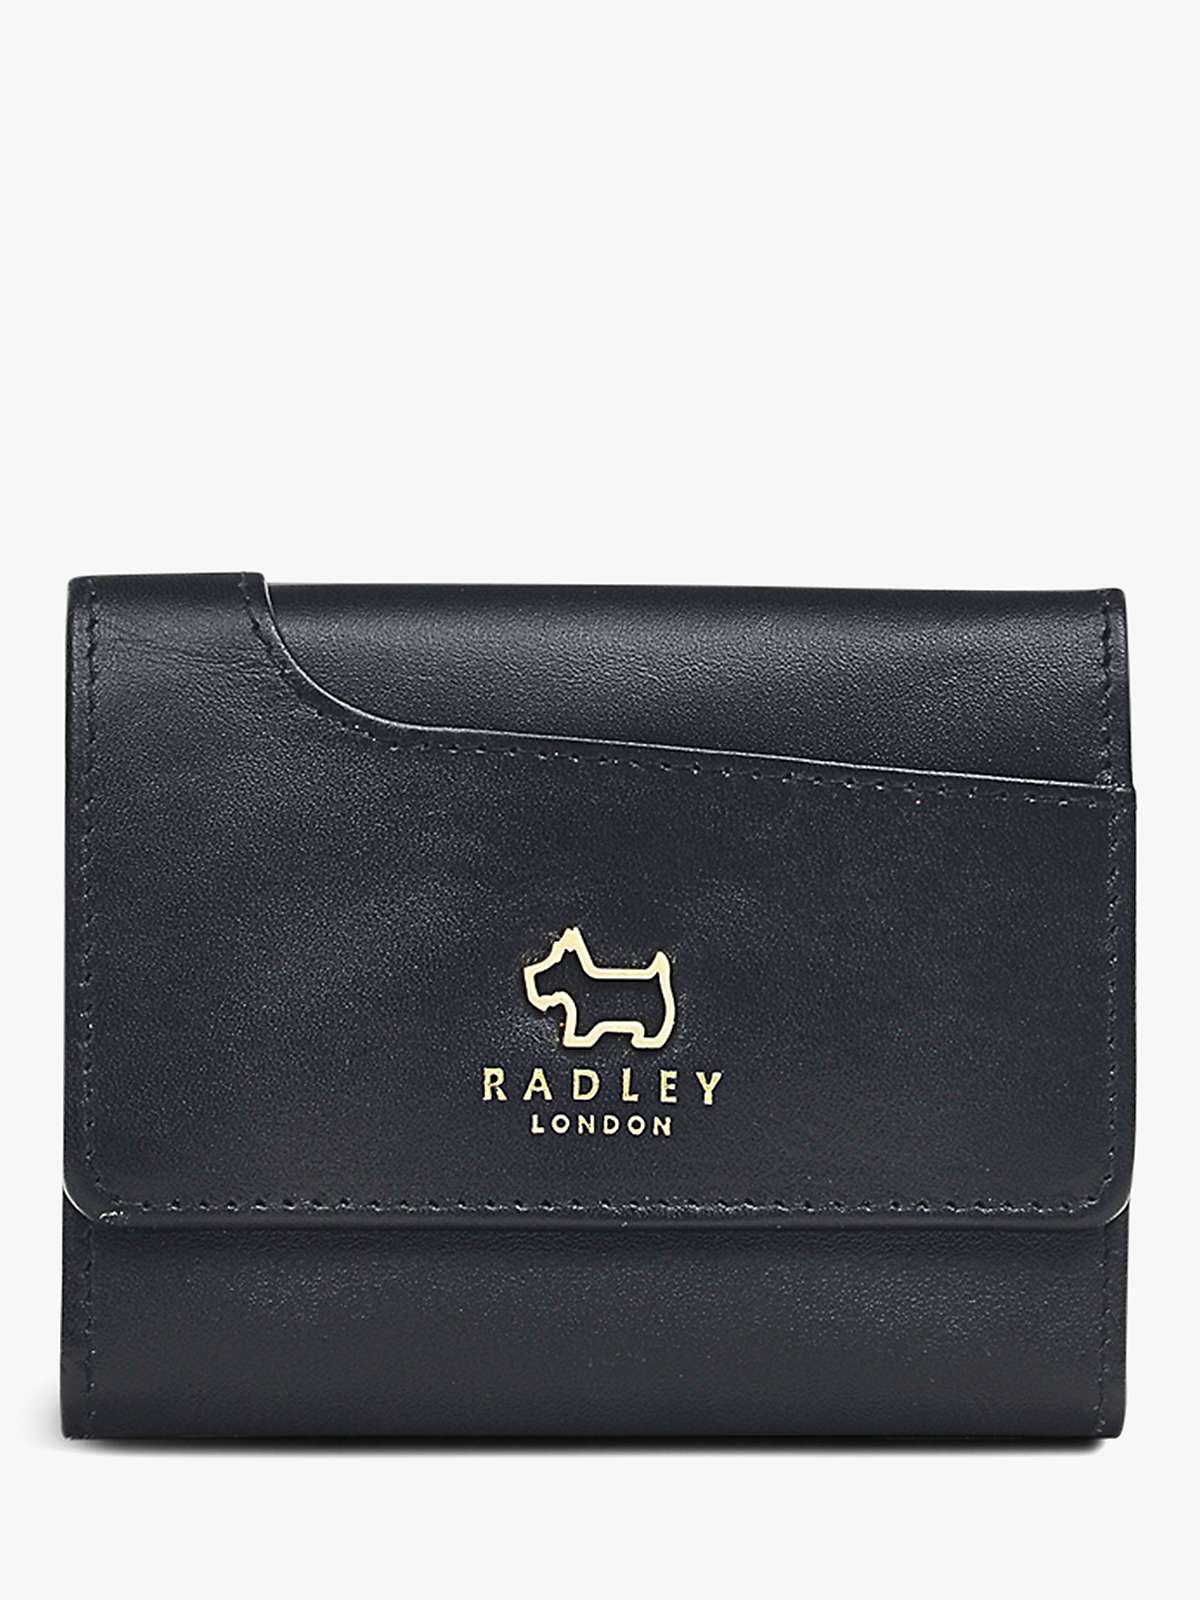 Buy Radley London Pockets Leather Tri-Fold Purse, Black Online at johnlewis.com